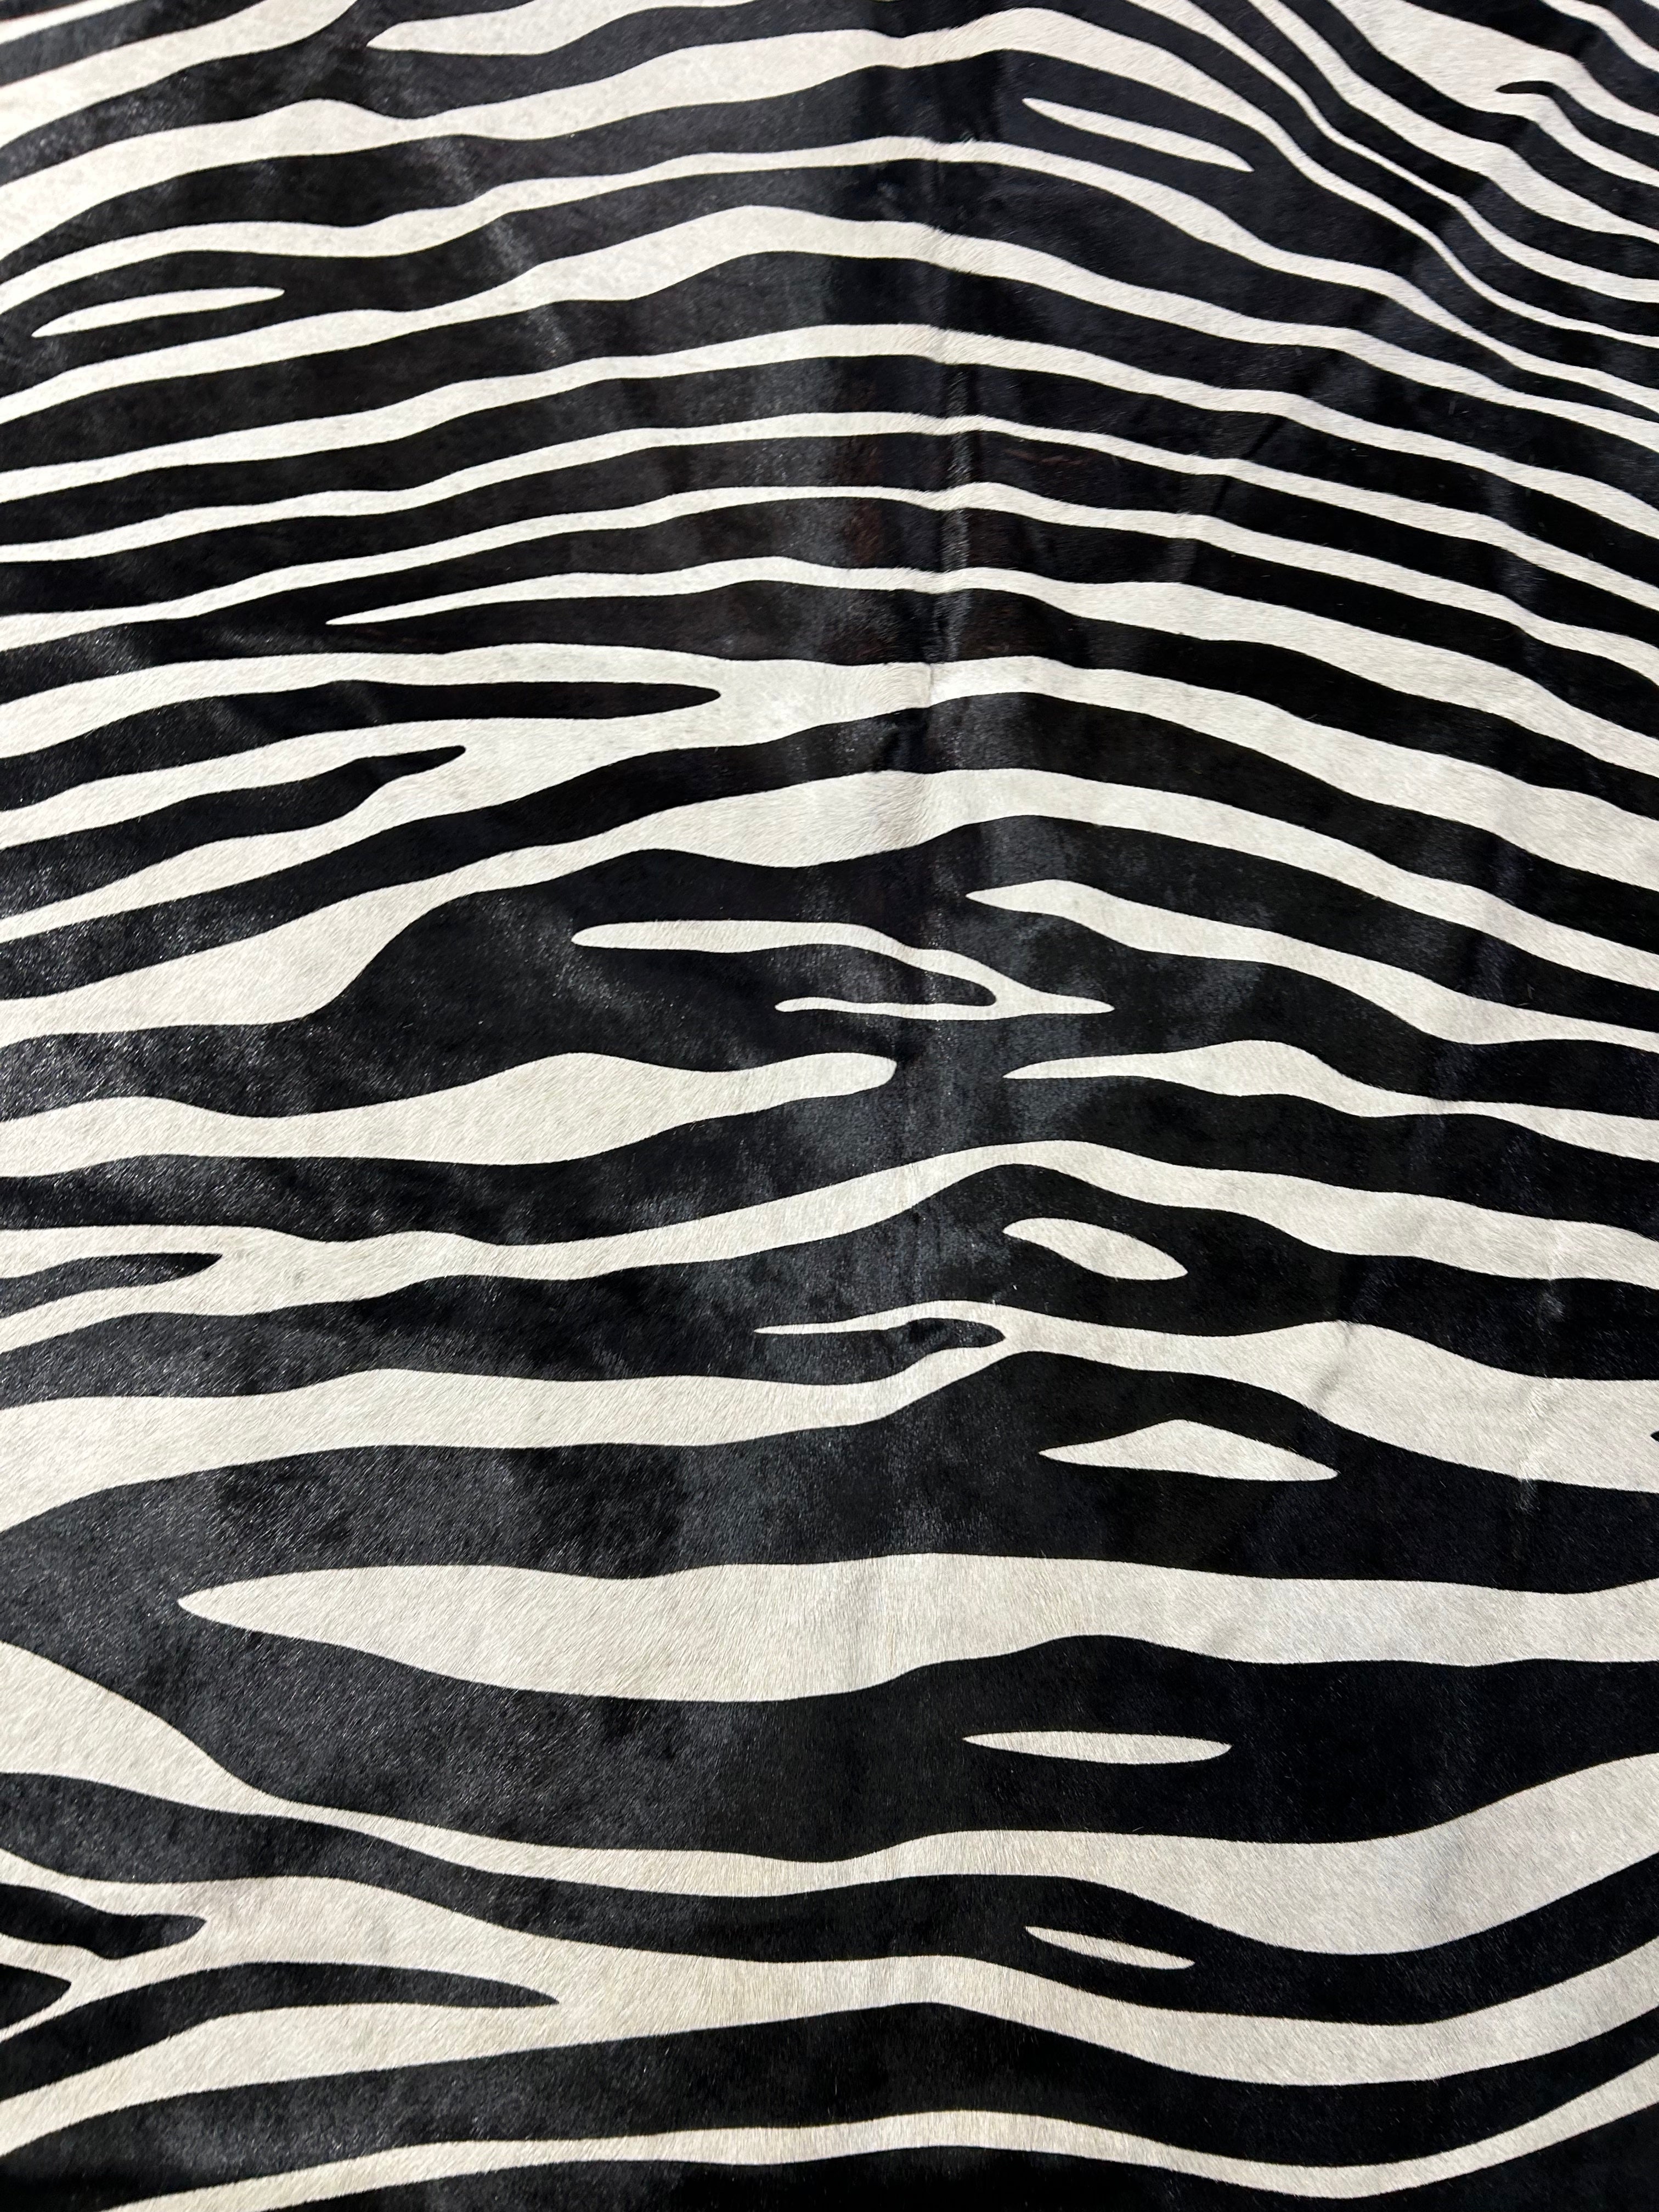 Black & White Zebra Print Cowhide Rug (1 patch) Size: 7.2x6 feet D-044